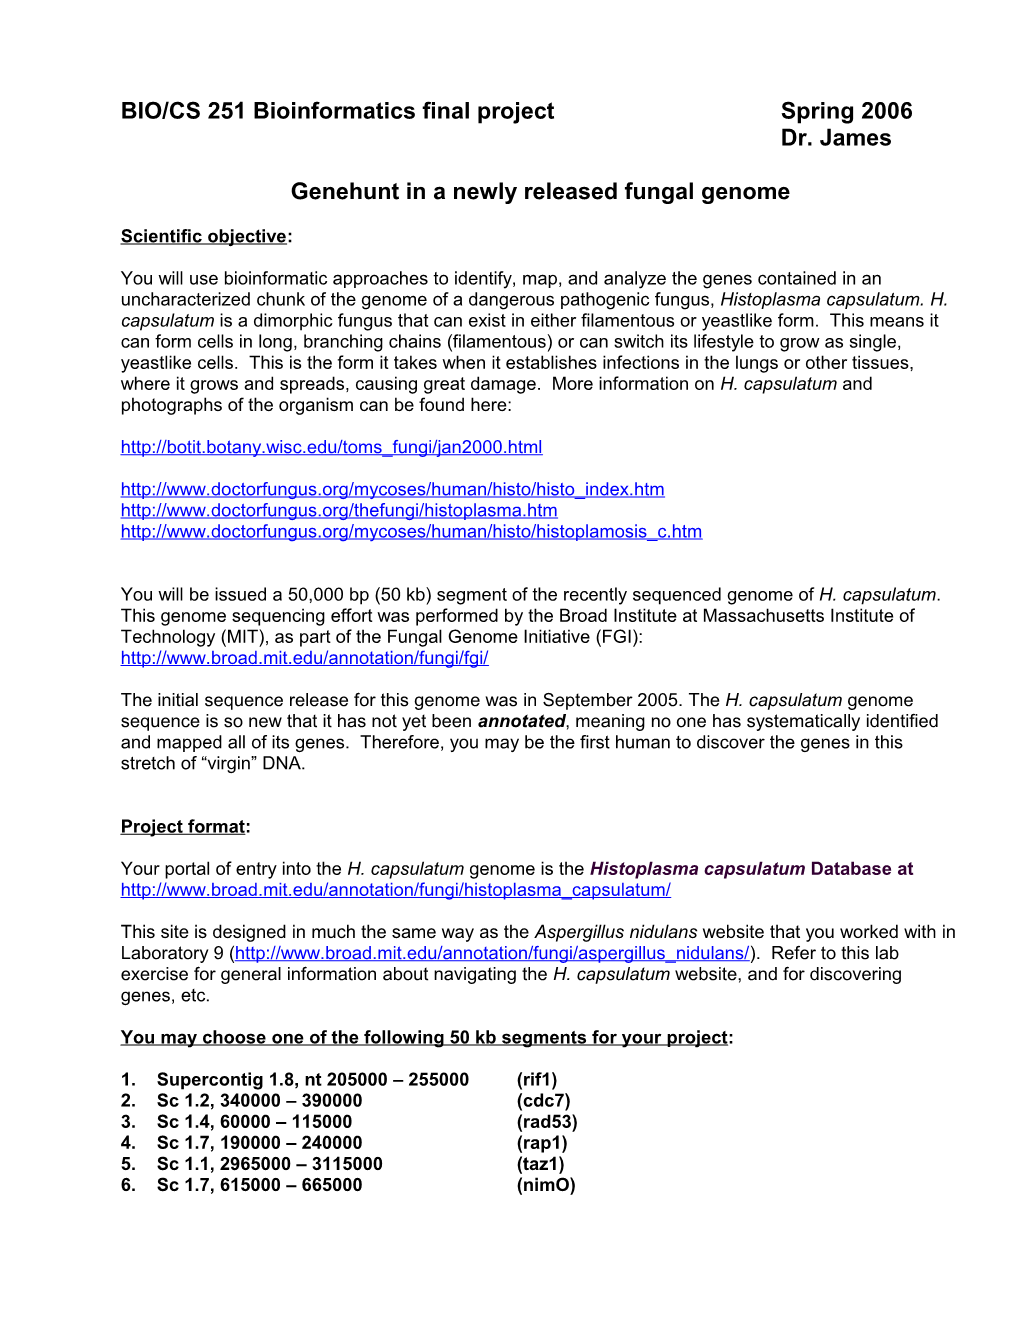 Bioinformatics Project: the Genehunt